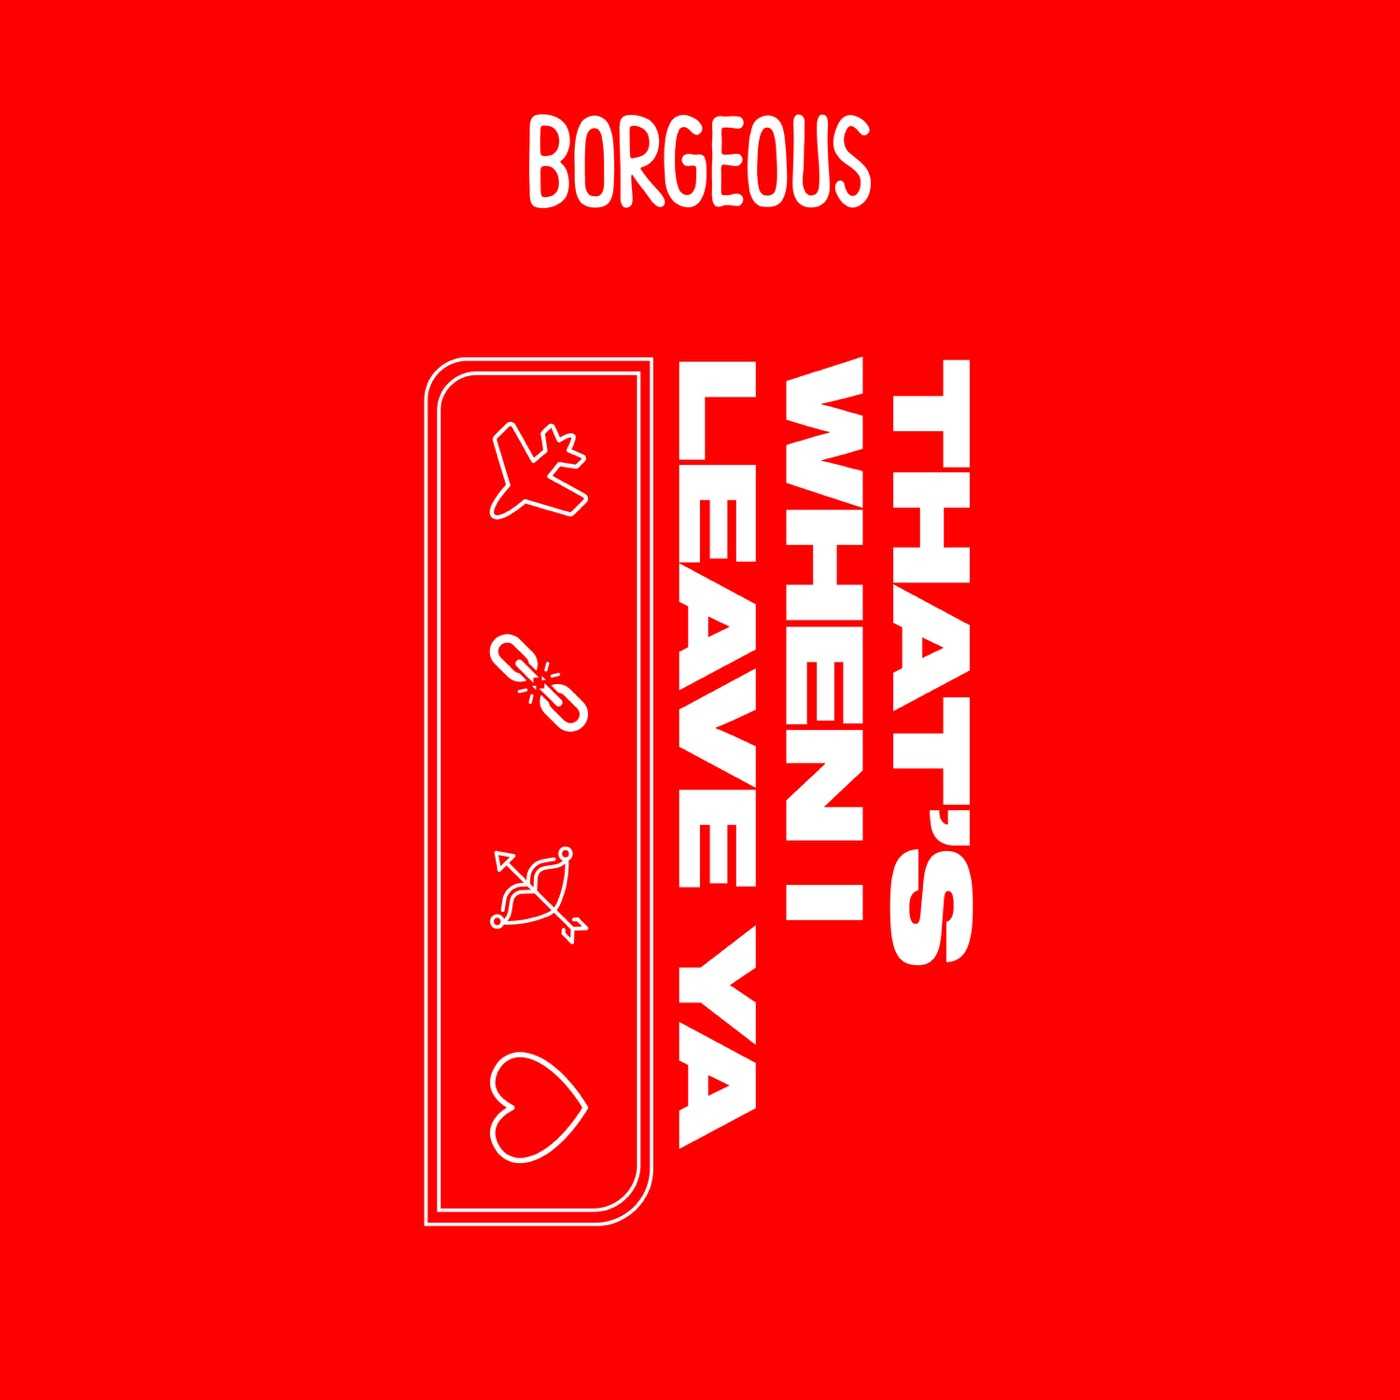 Borgeous - Thats When I Leave Ya